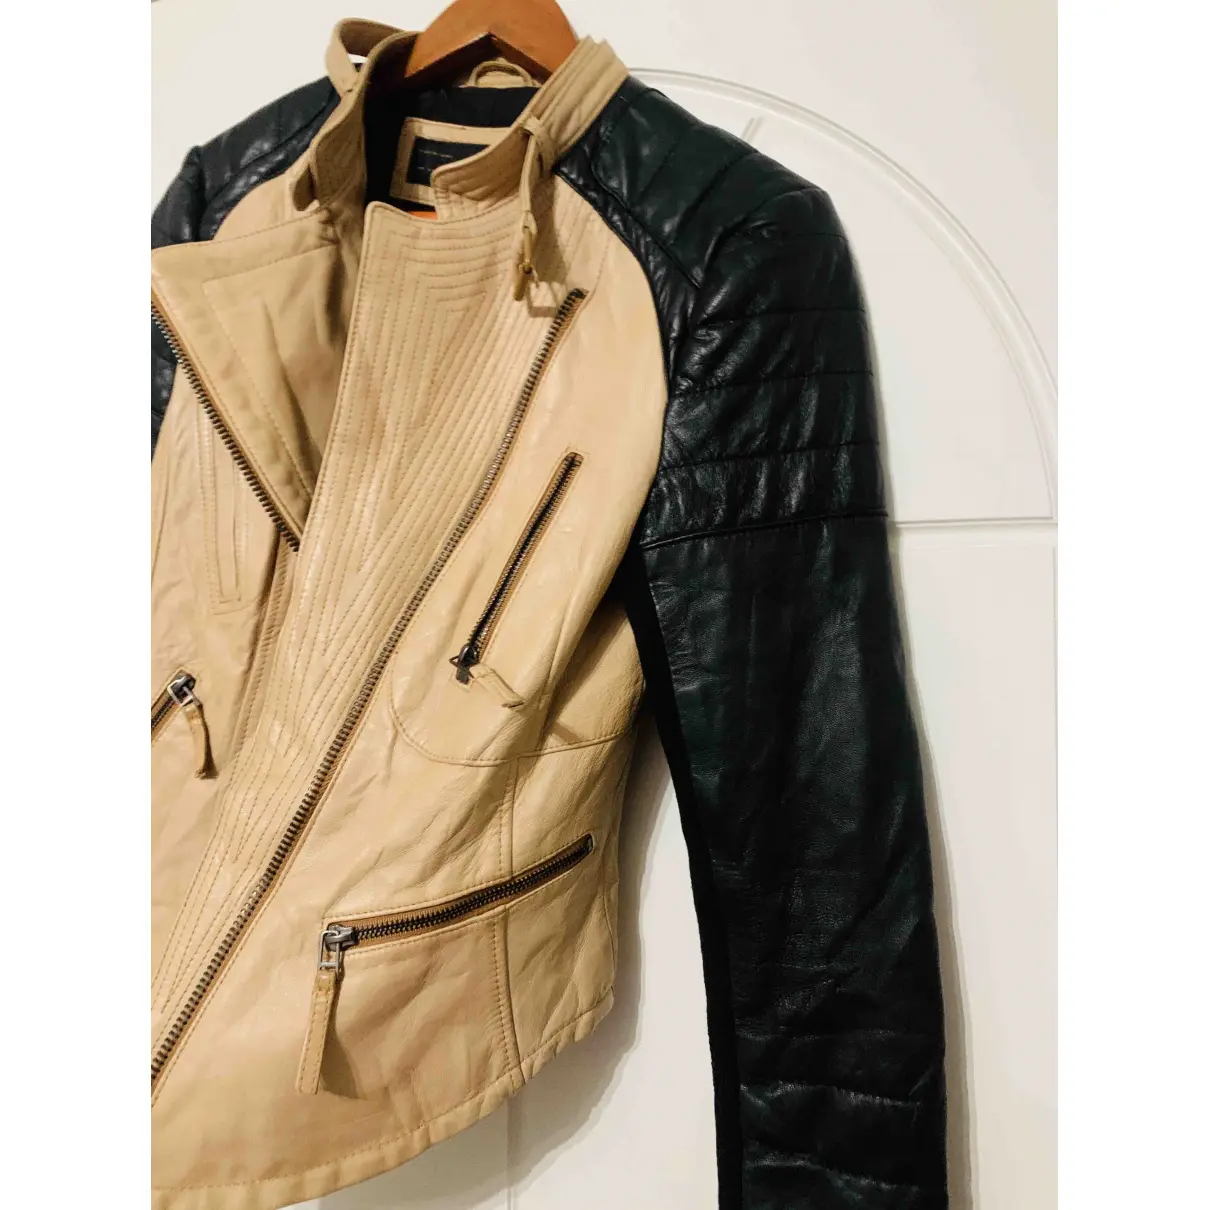 Leather biker jacket Zara